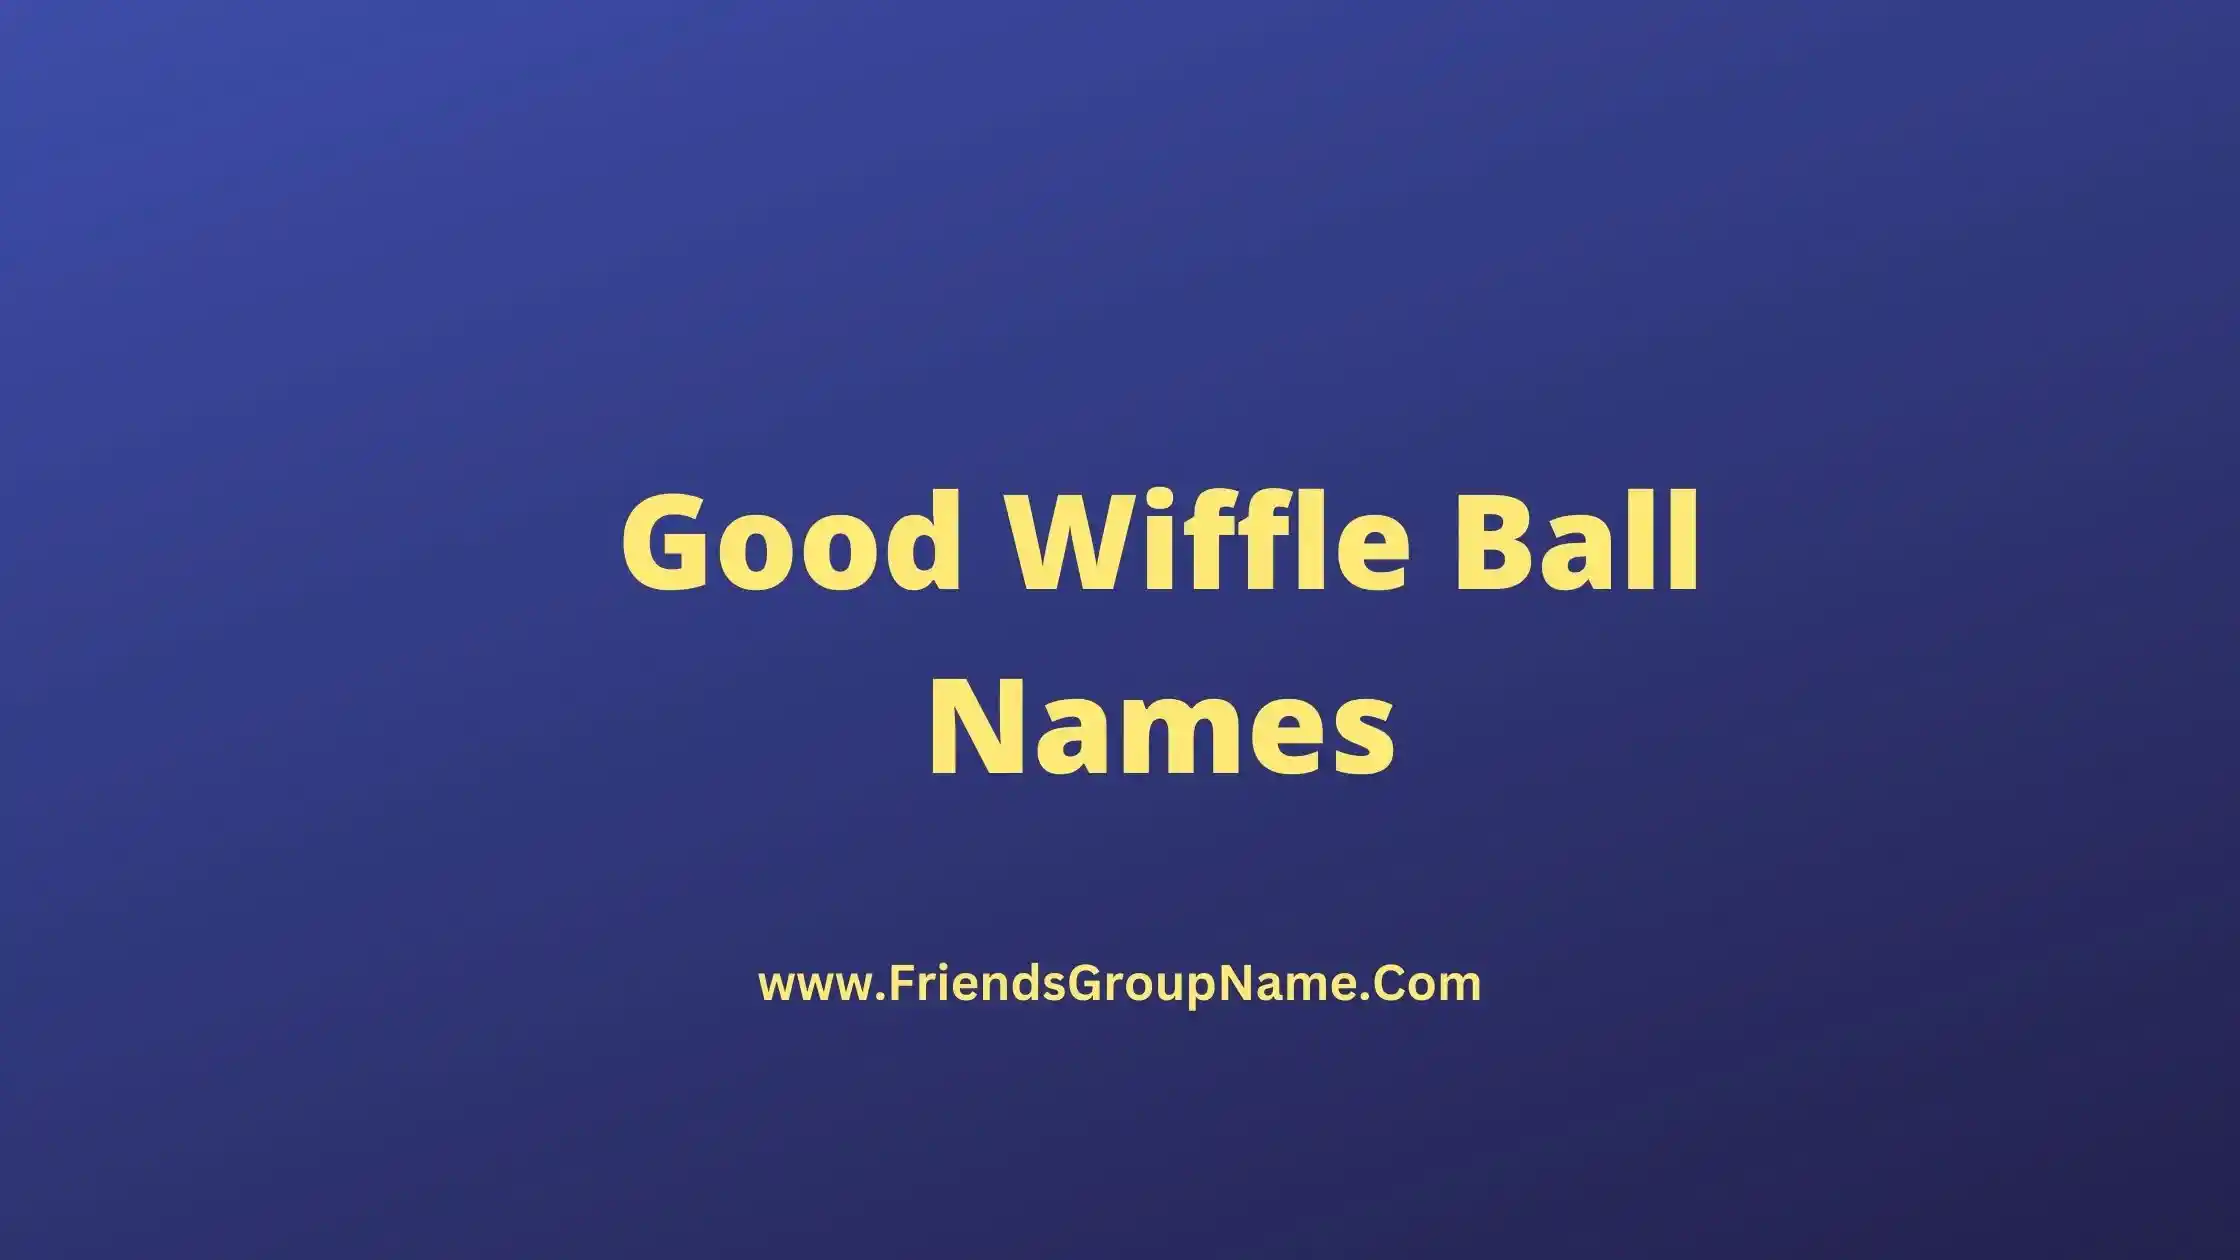 Good Wiffle Ball Names